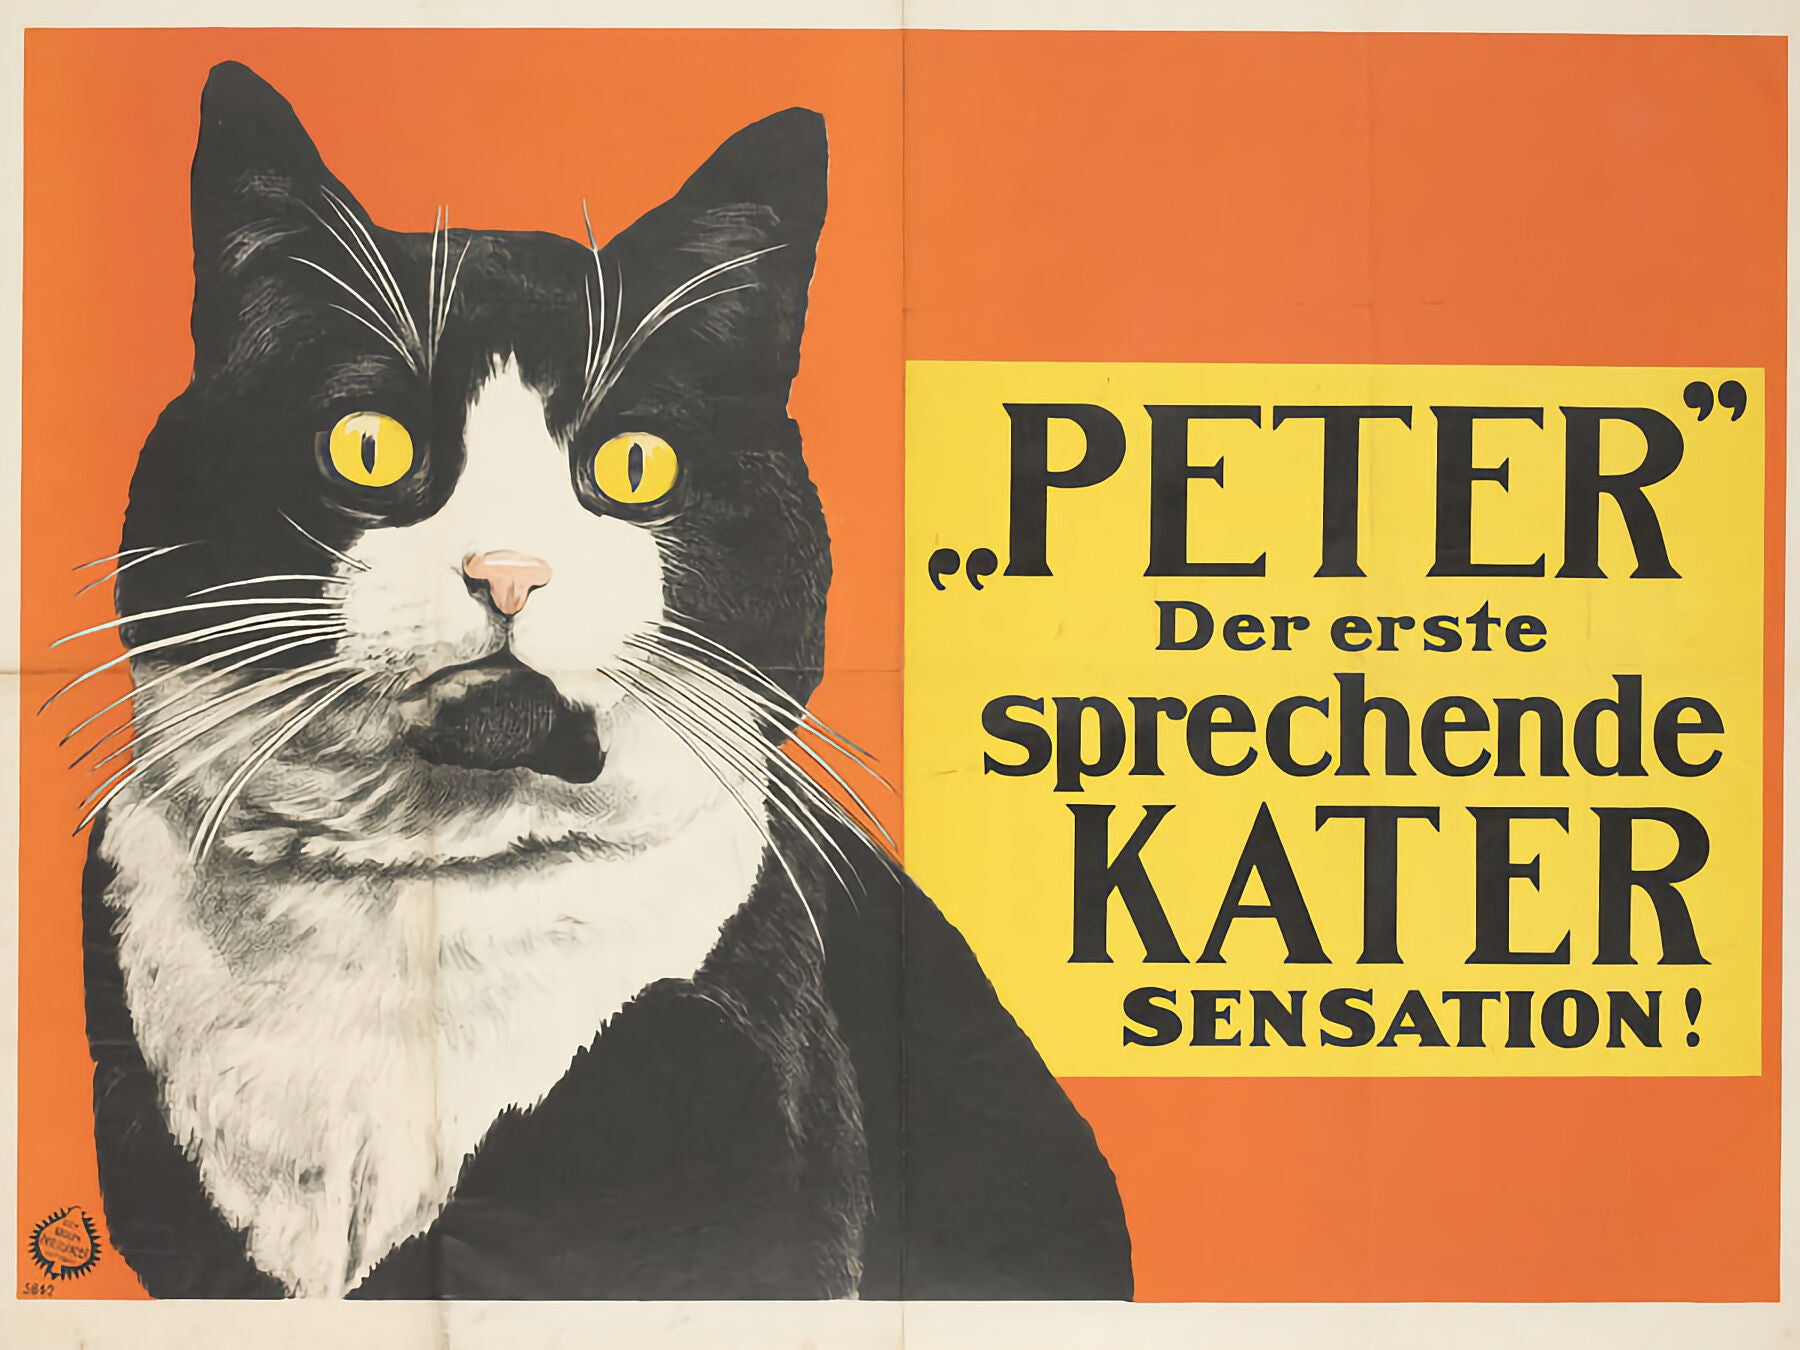 Adolph Friedländer, Peter - The first talking Tom Cat - sensation! (original title), c. 1913